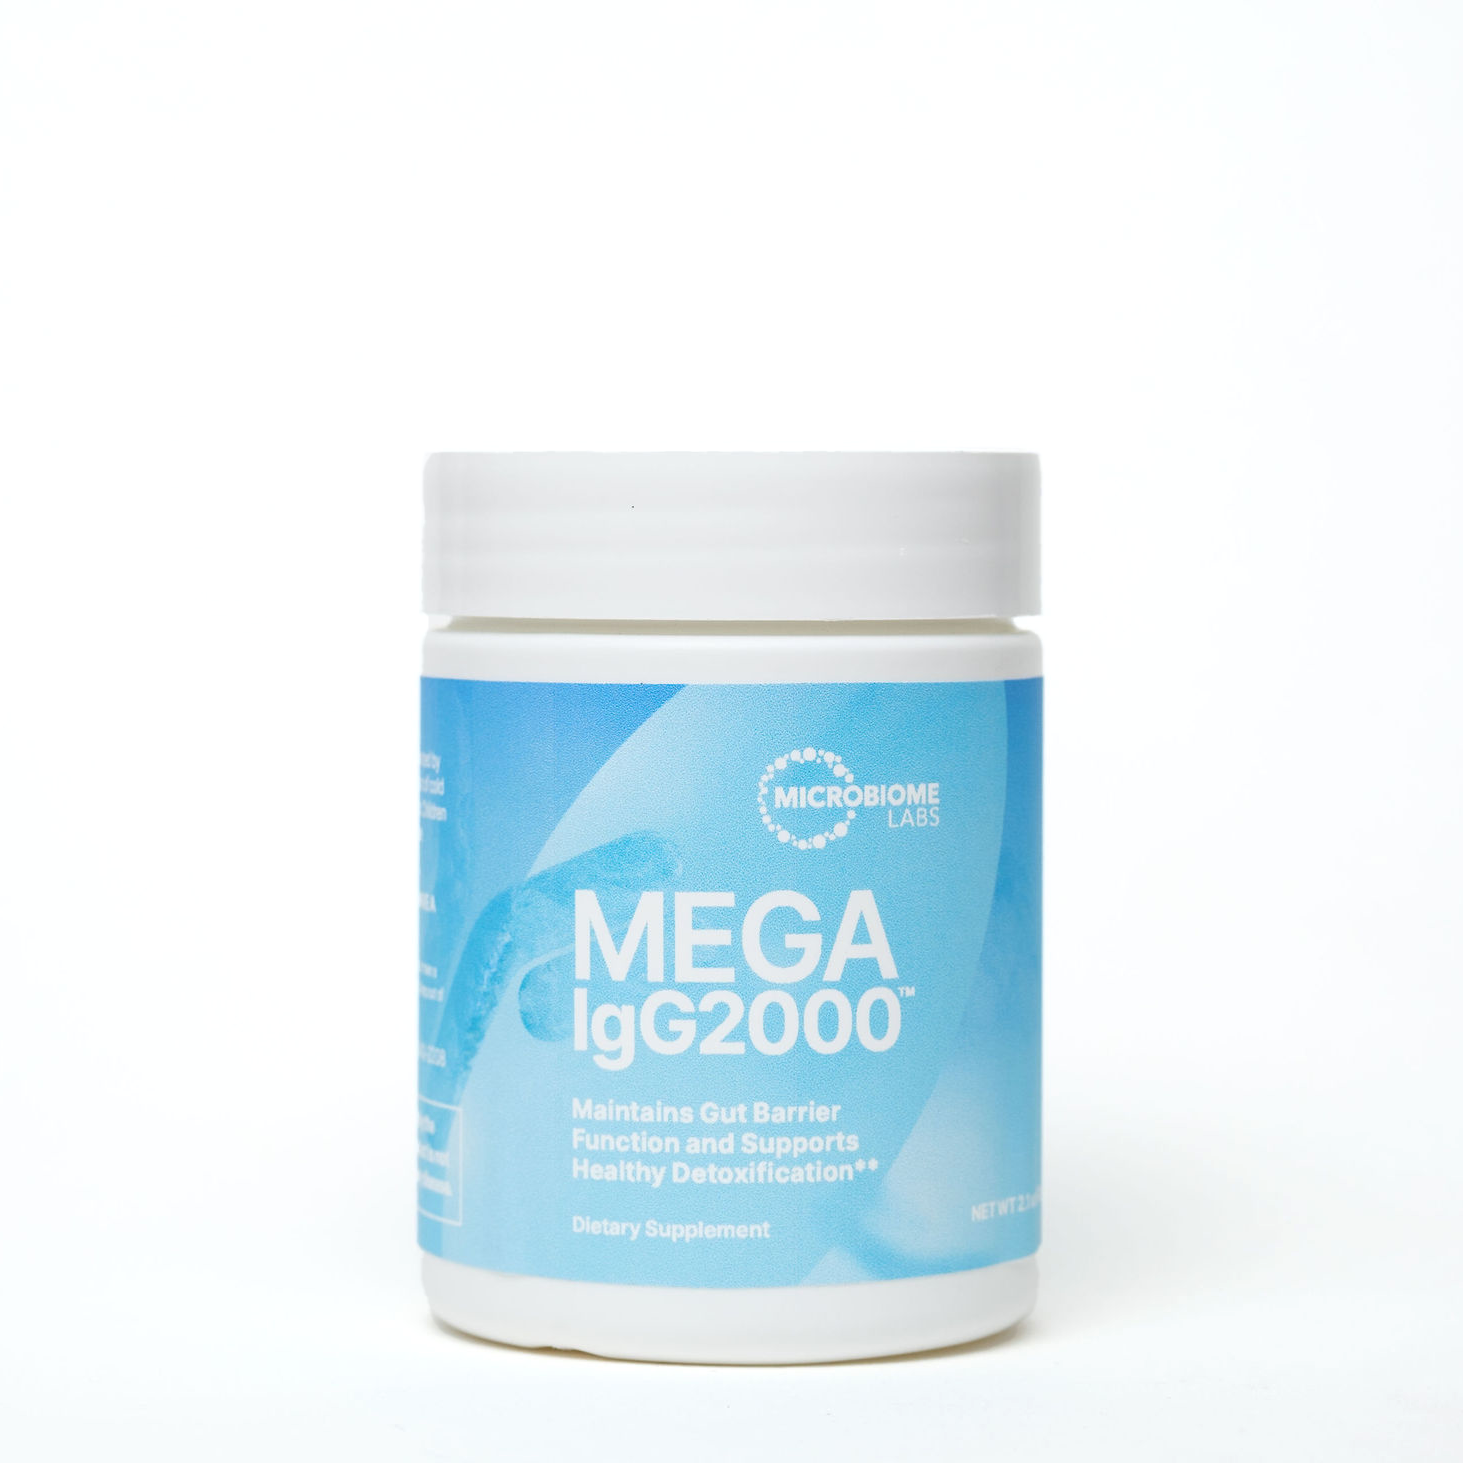 Mega IgG2000 by Microbiome Labs powder dairy free immunoglobulin